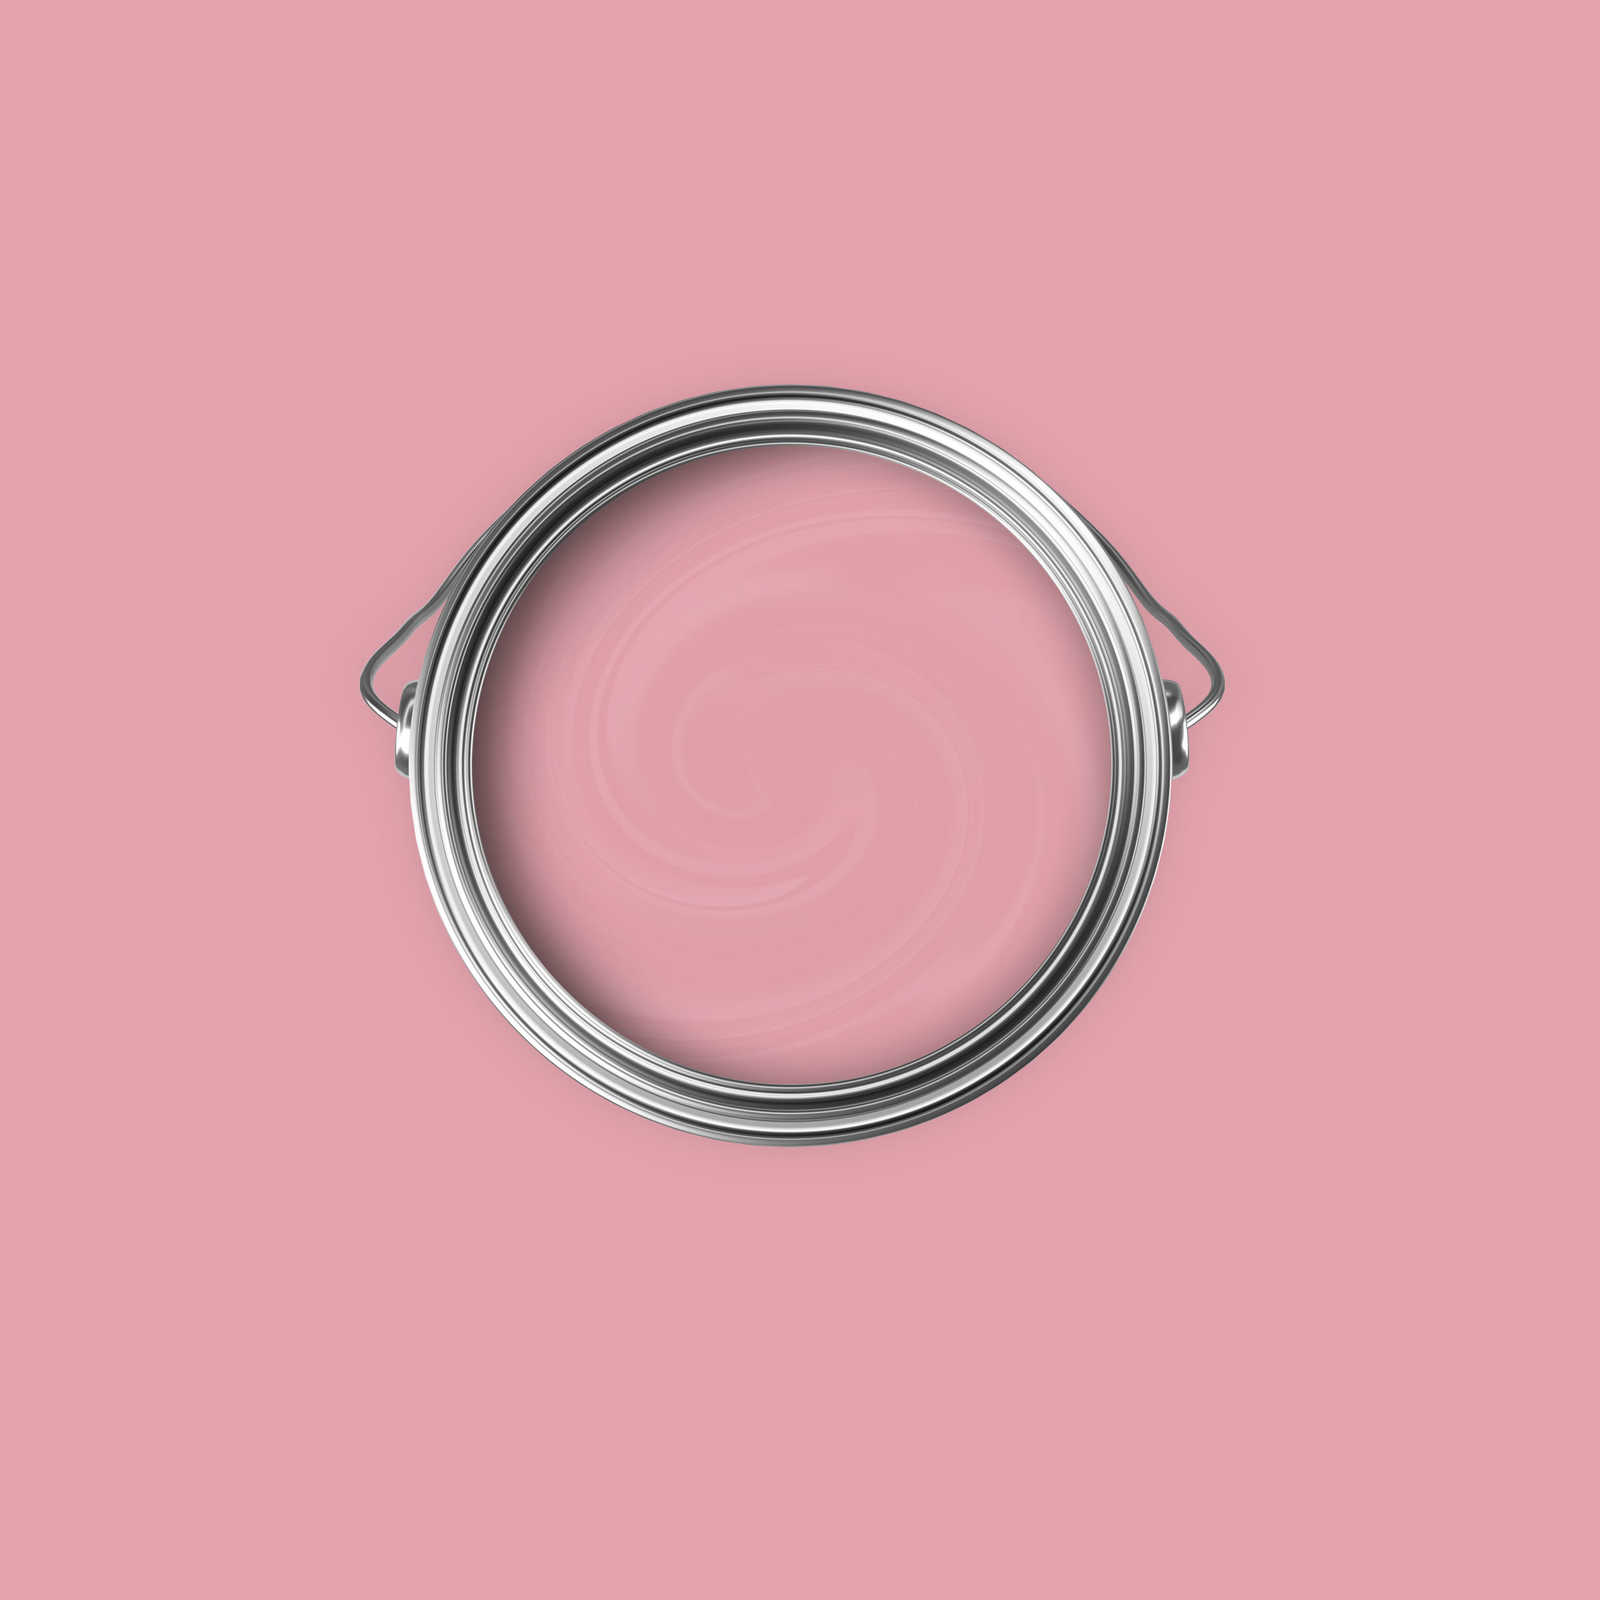             Pintura mural Premium alegre rosa bebé »Blooming Blossom« NW1017 – 2,5 litro
        